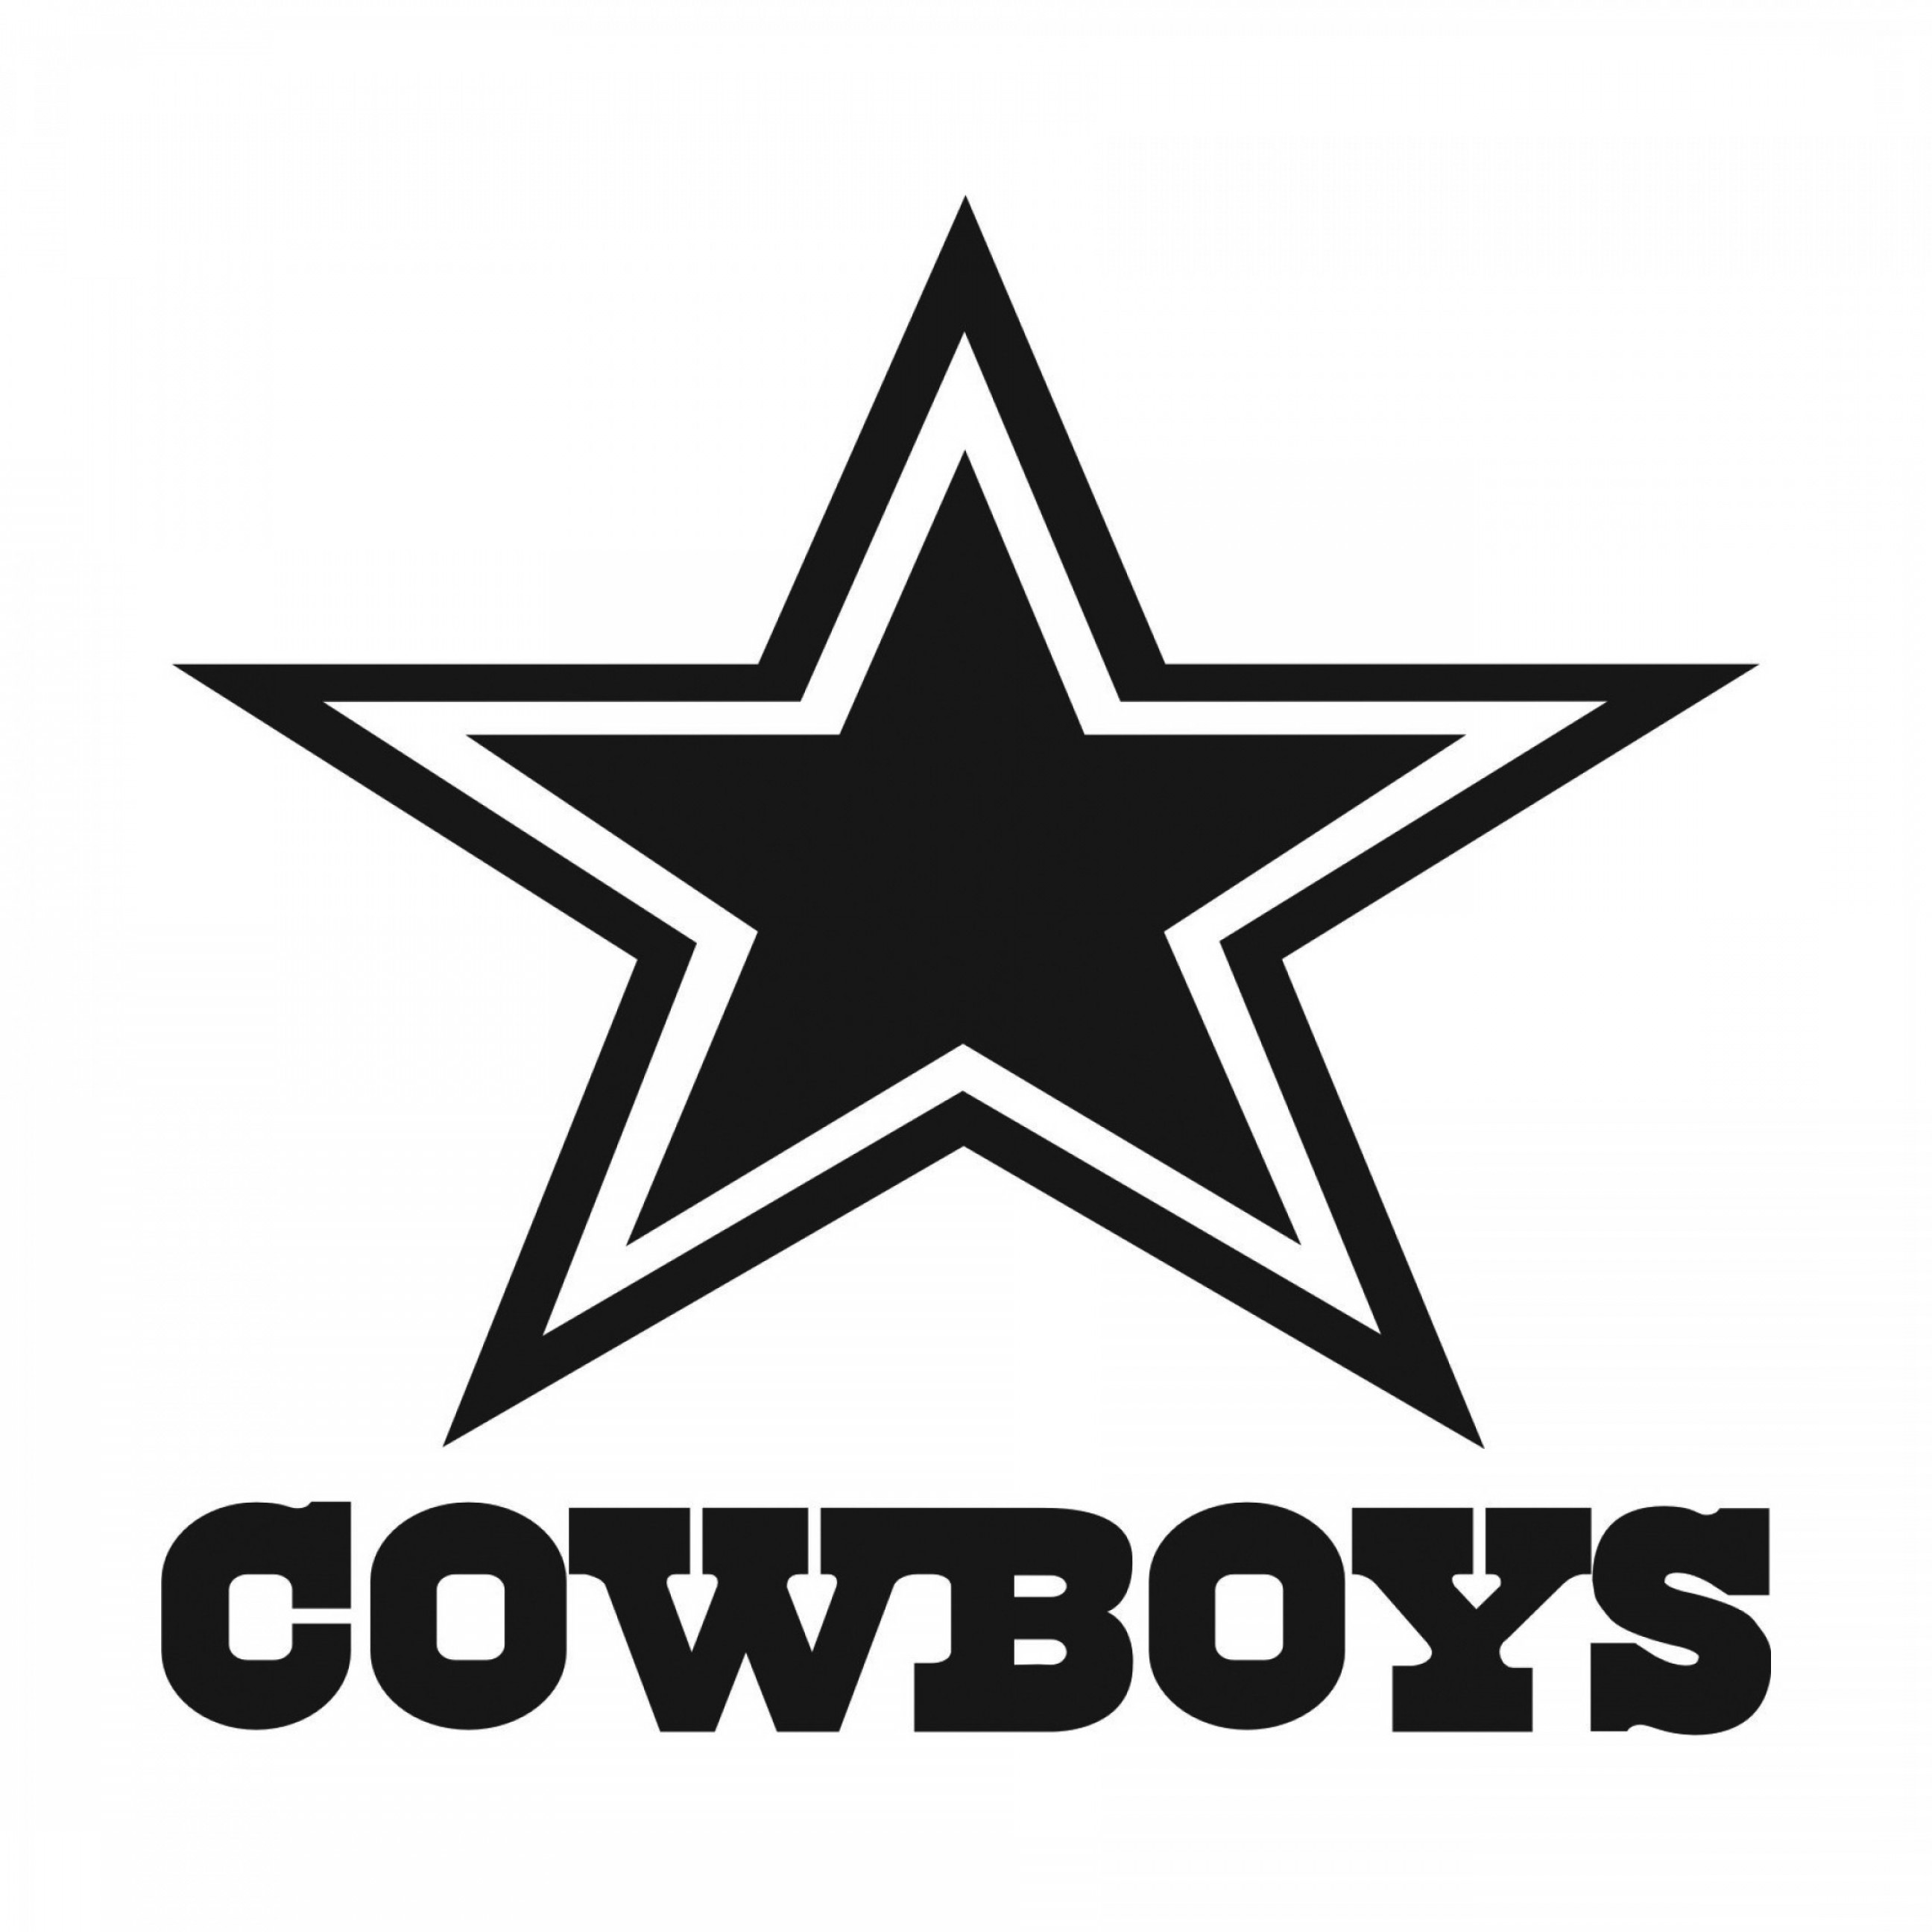 Download Dallas Cowboys Star Vector at Vectorified.com | Collection ...